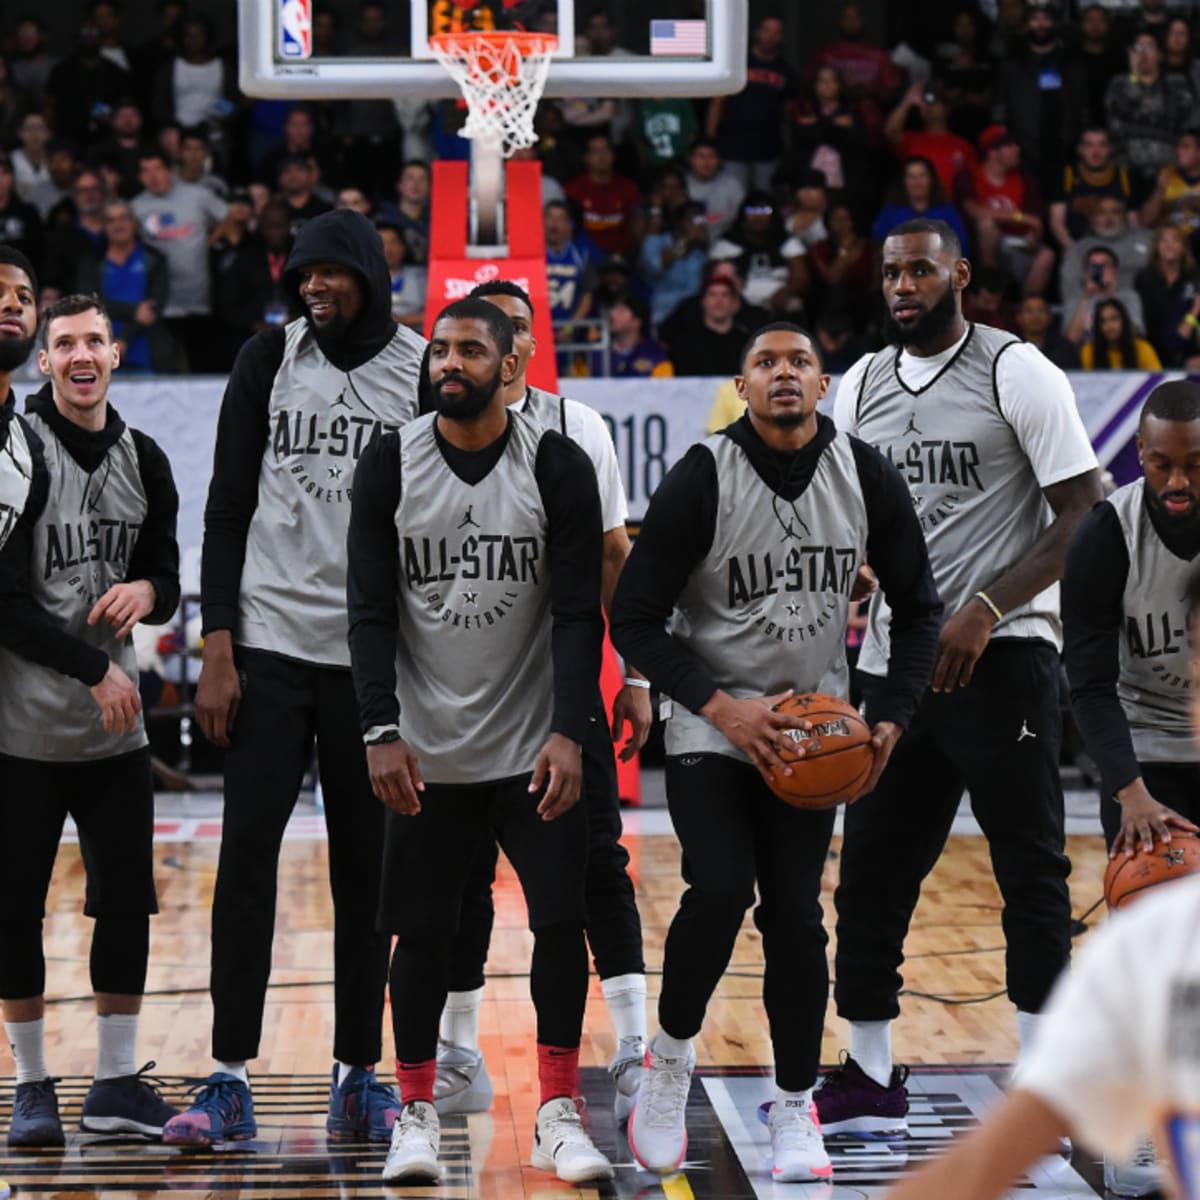 2018 NBA All-Star Game Teams selected - Westbrook on Team James